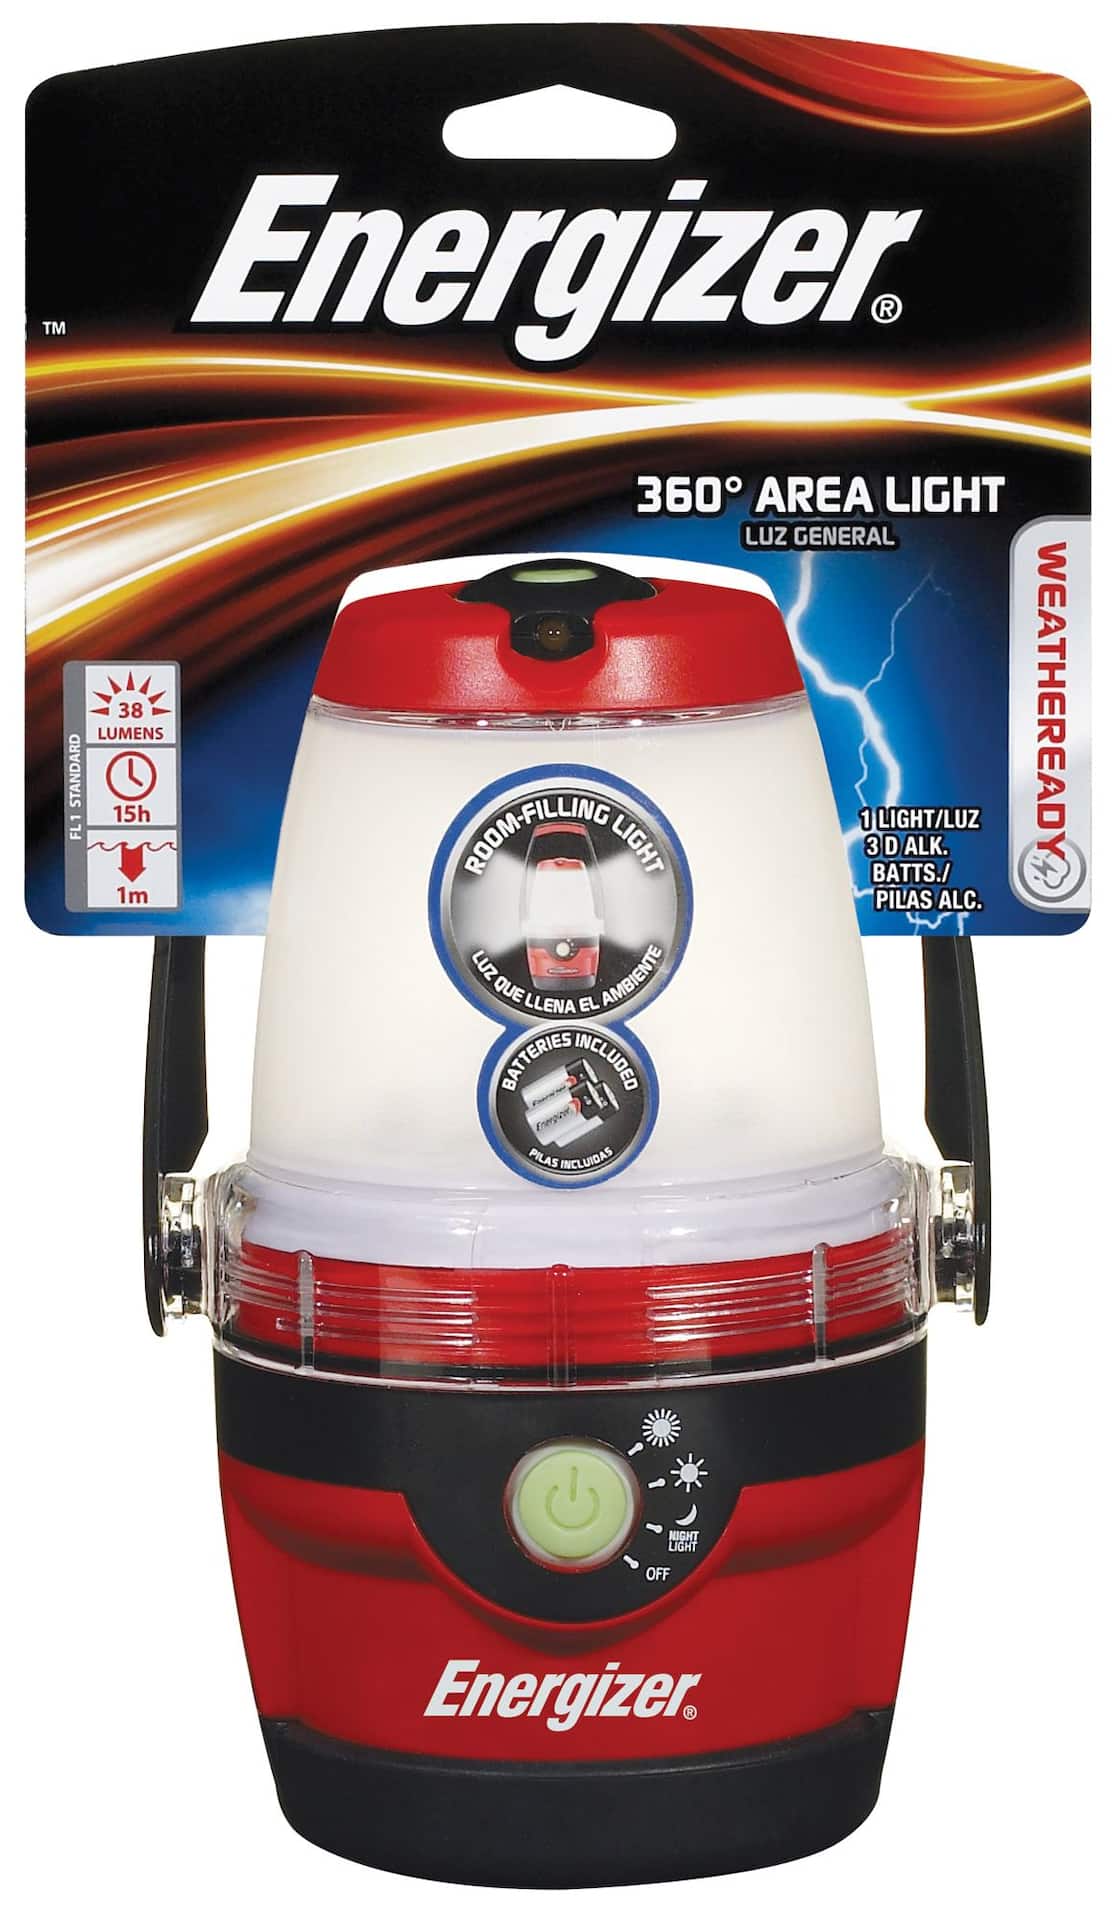 https://media-www.canadiantire.ca/product/fixing/hardware/household-flashlights/0650014/weatheready-multiuse-lantern-1cb96640-27eb-4cc5-b6a0-0af3b55ee090-jpgrendition.jpg